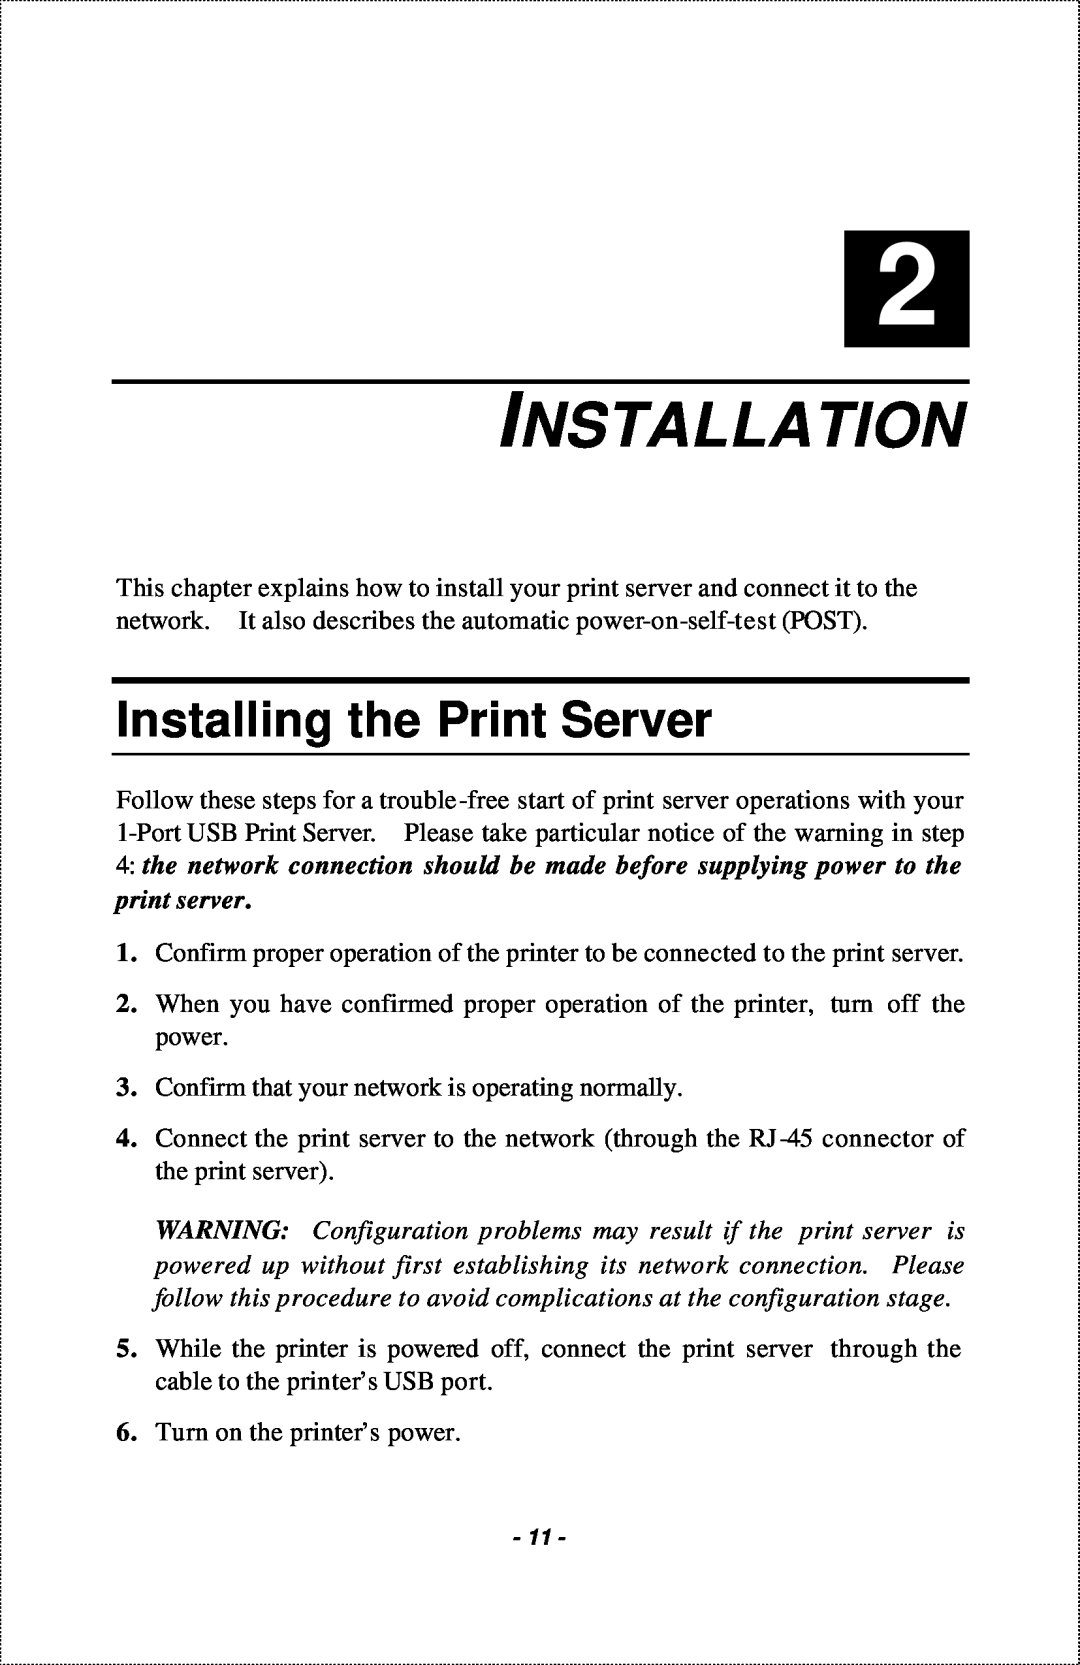 IBM 1-Port USB Print Server manual Installation, Installing the Print Server 